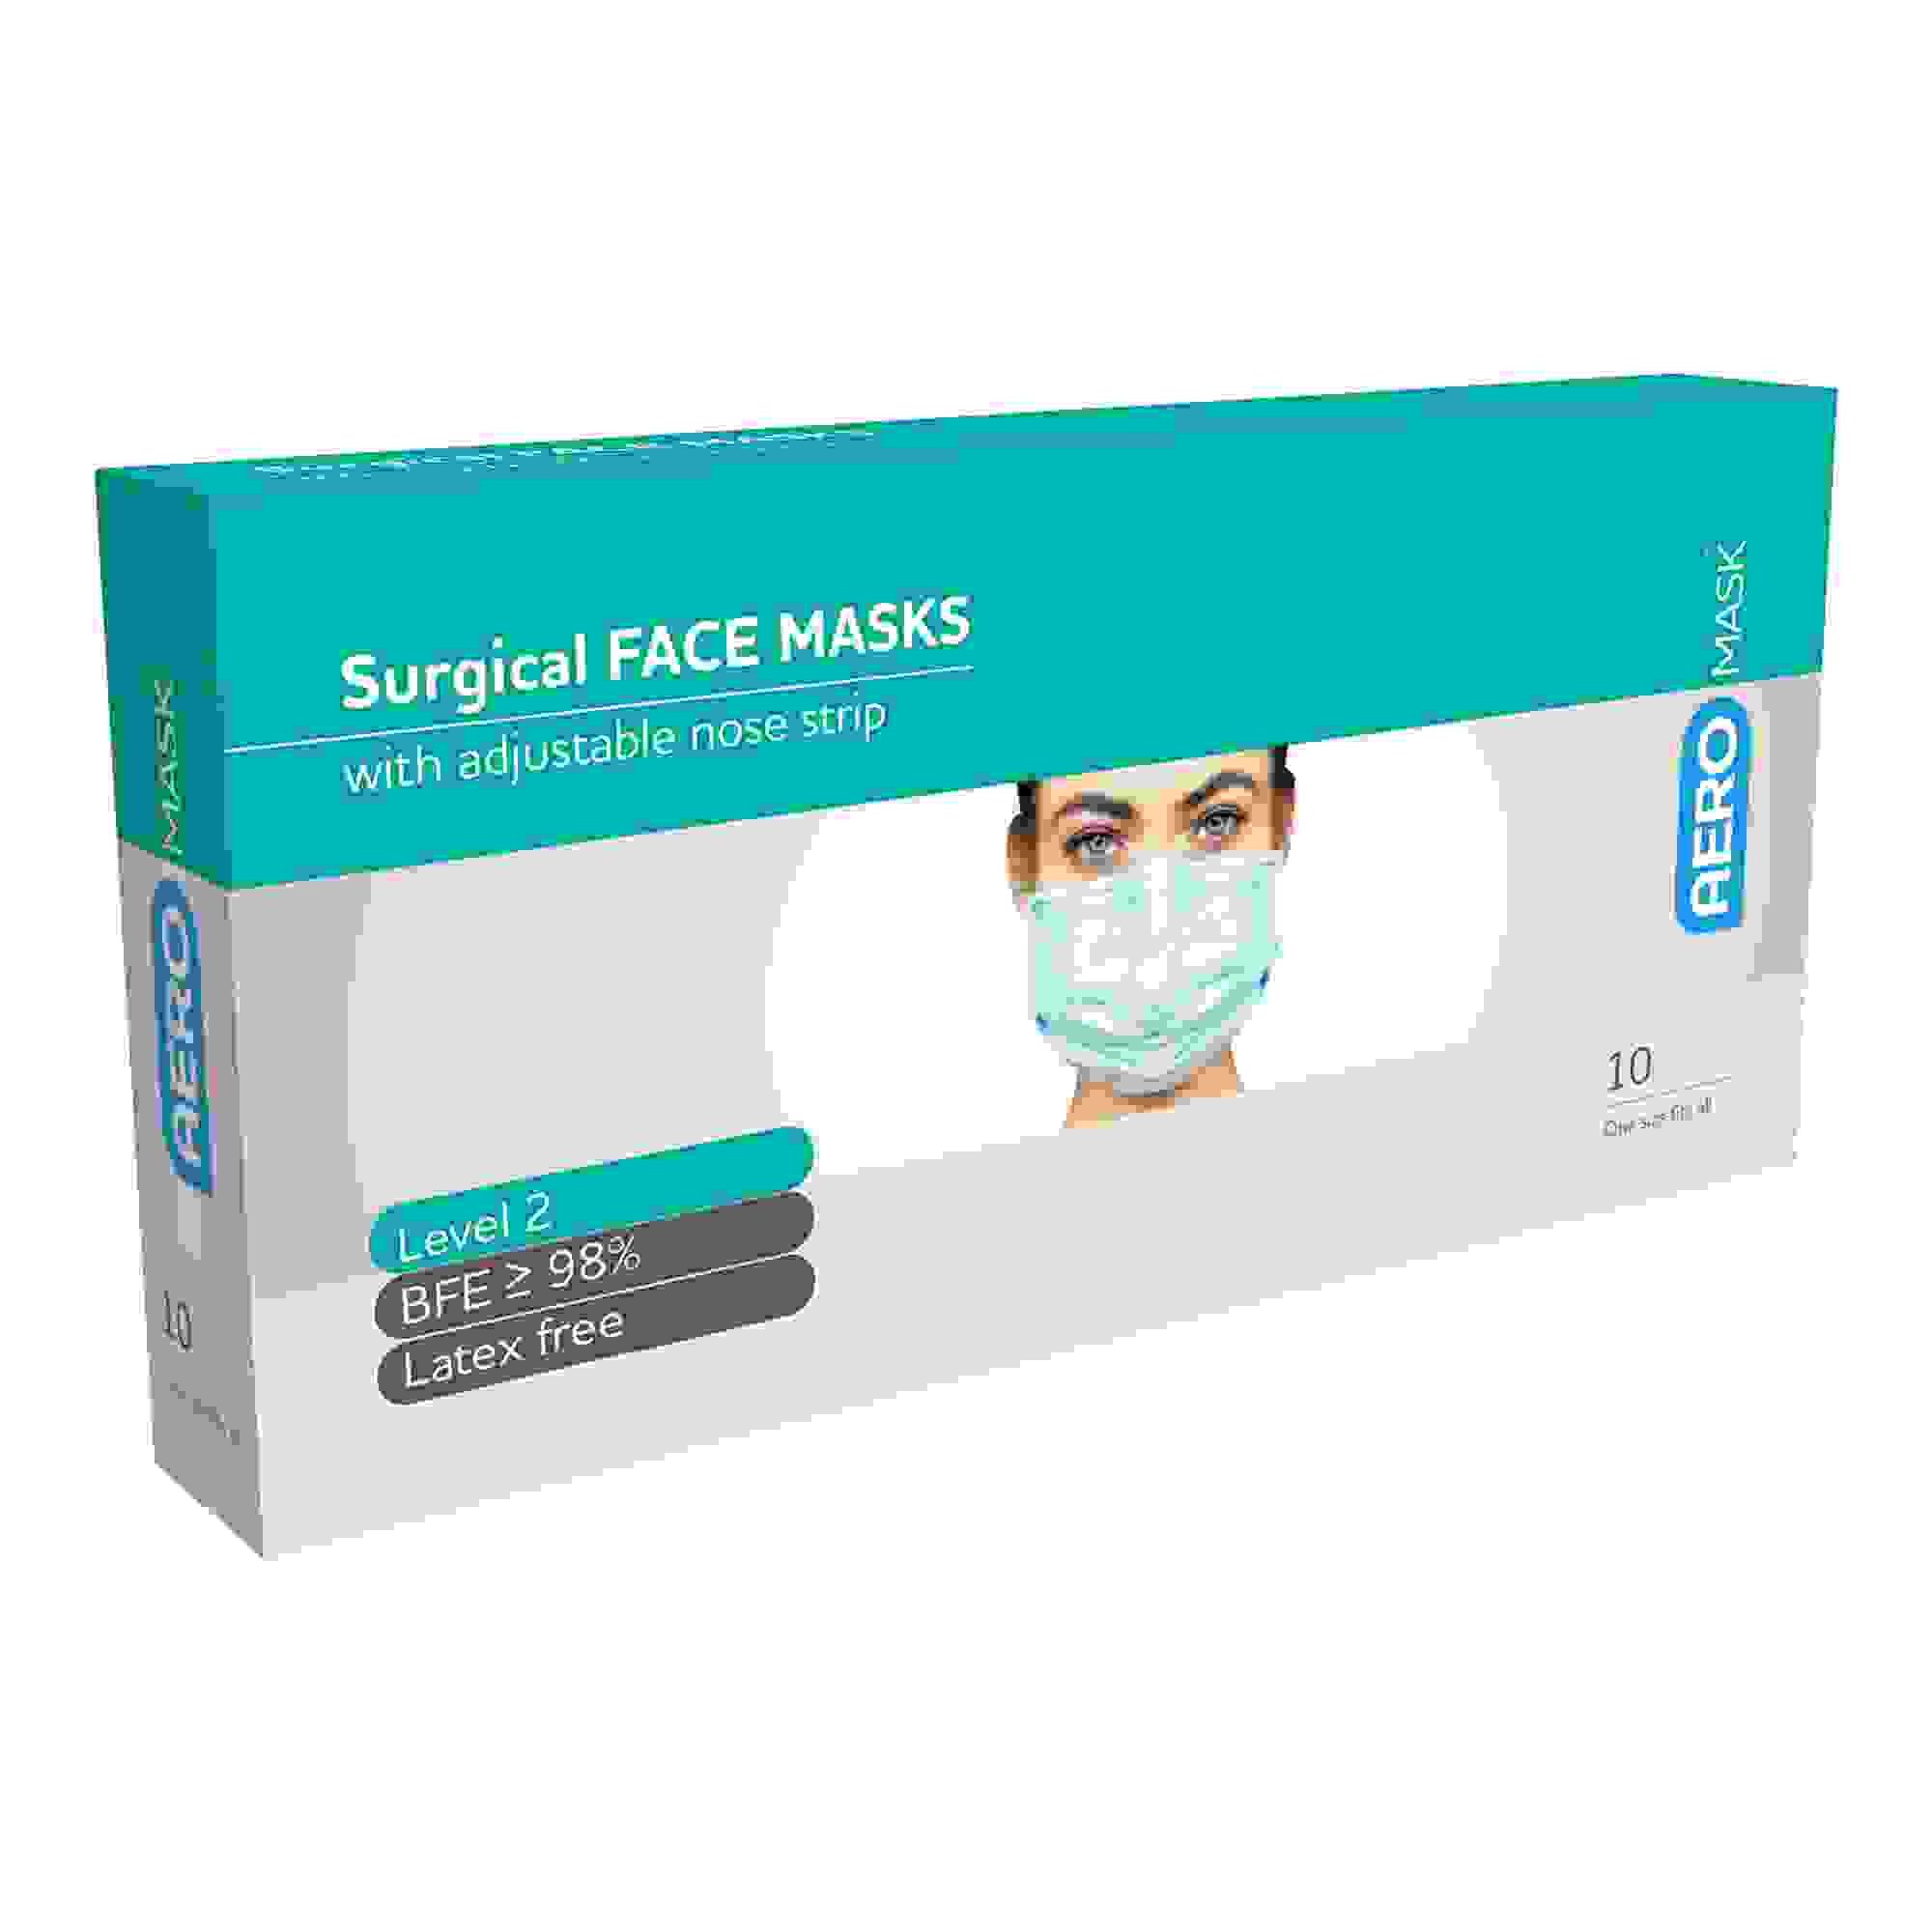 Level 2 Surgical Masks (Box of 10)